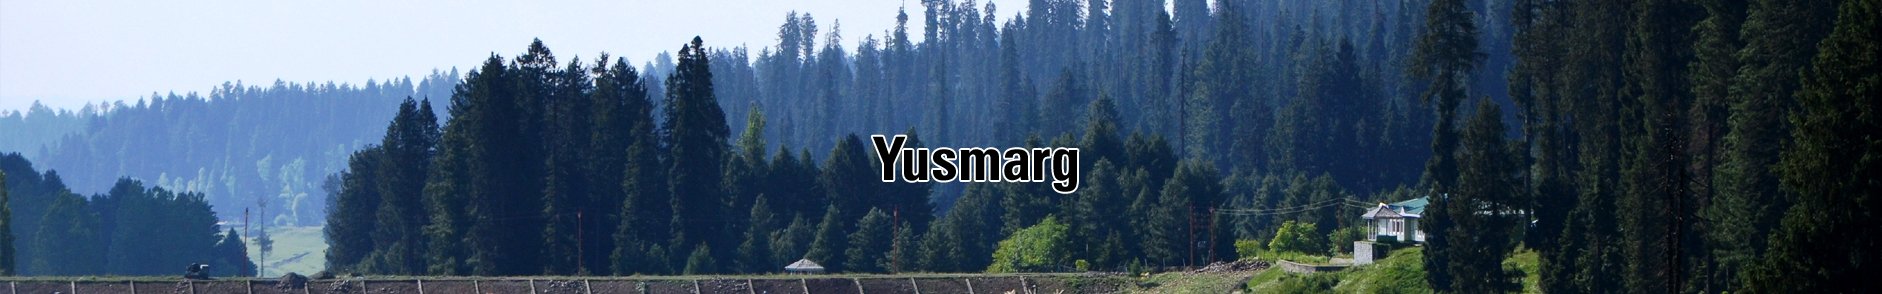 Hotels in Yusmarg